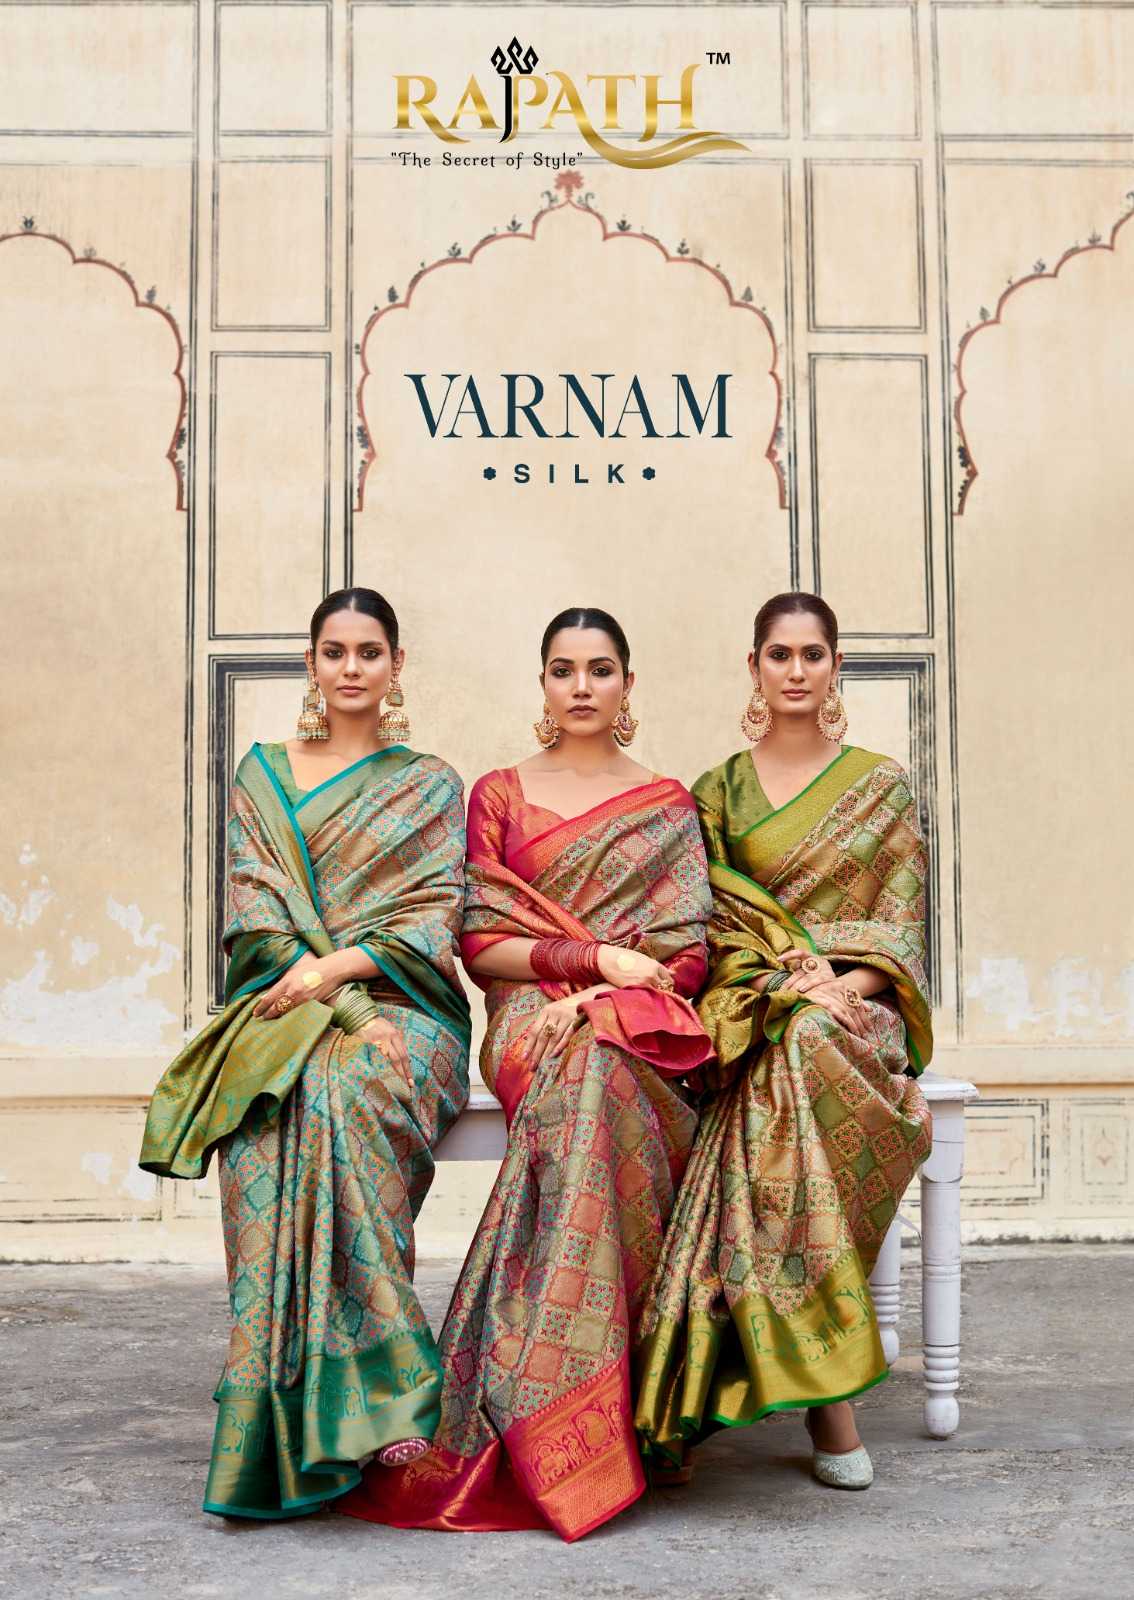 rajpath varnam silk 280001-280006 traditional wear designer zari weaving sarees